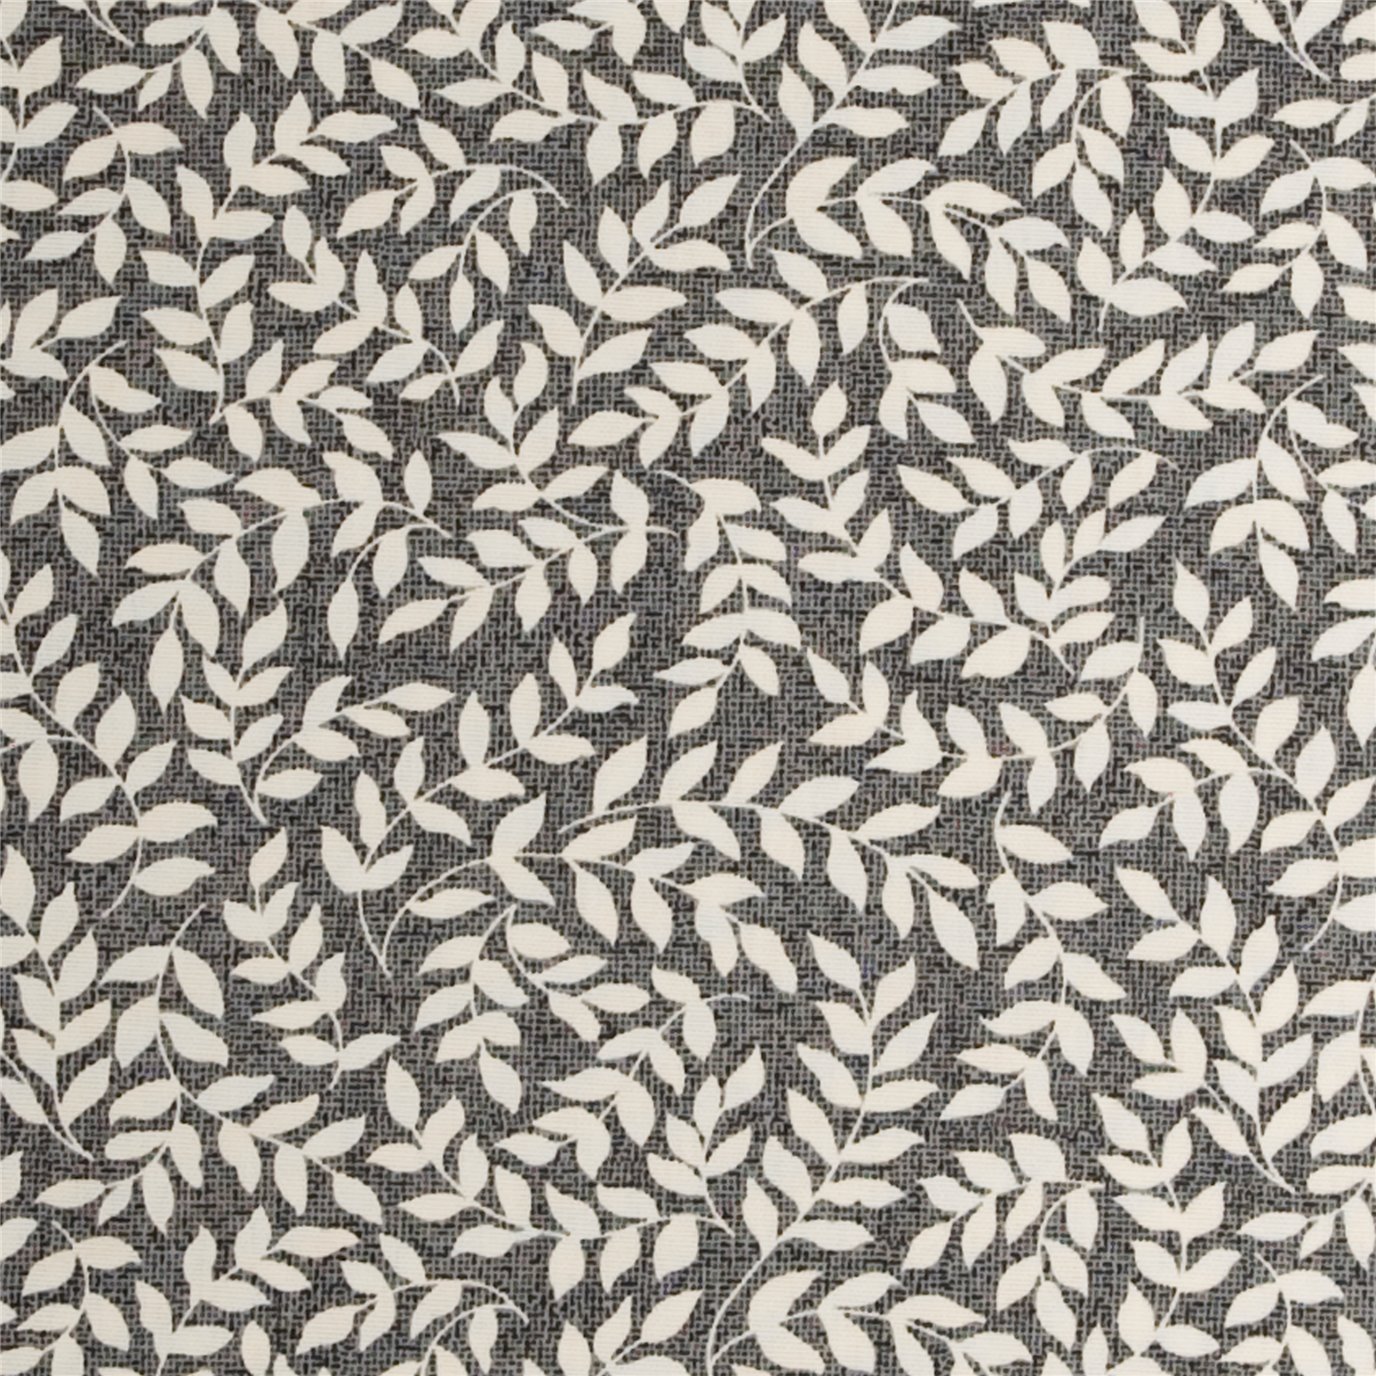 Bouvier Leaf Print Fabric (non-returnable)